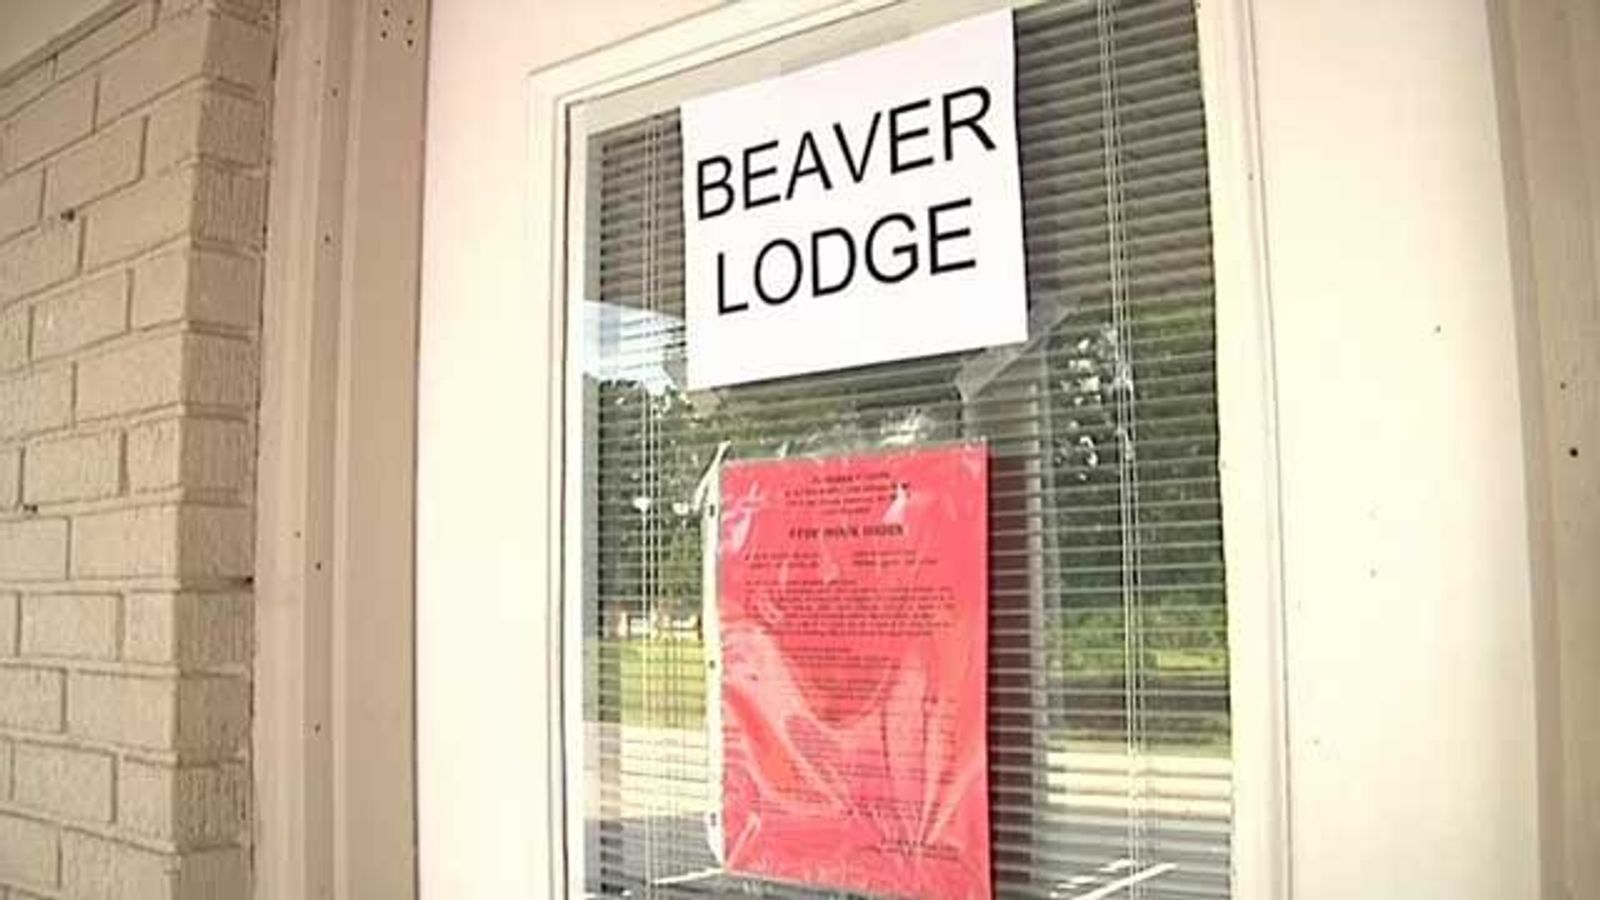 S. Carolina Swingers Club 'The Beaver Lodge' Gets the Boot